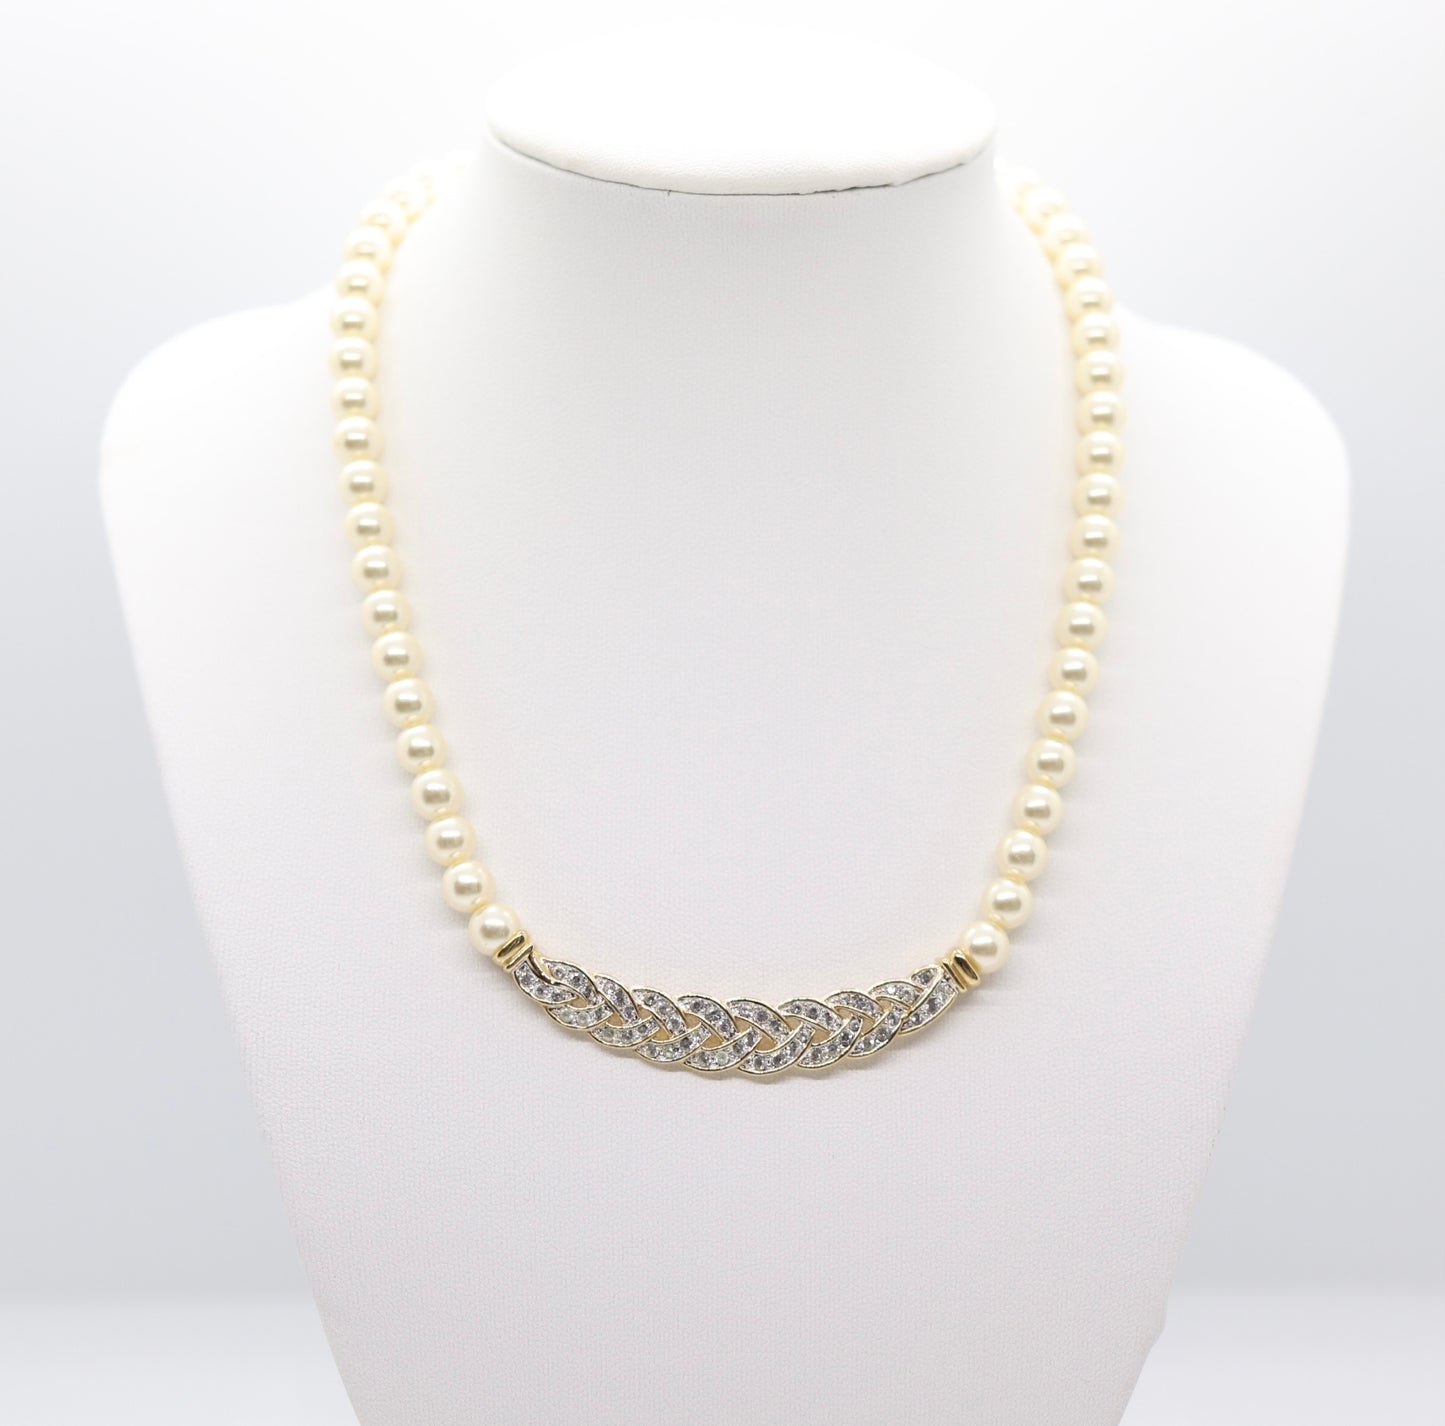 Beautiful Pearl Swarovski Elements Crystal Braided Necklace